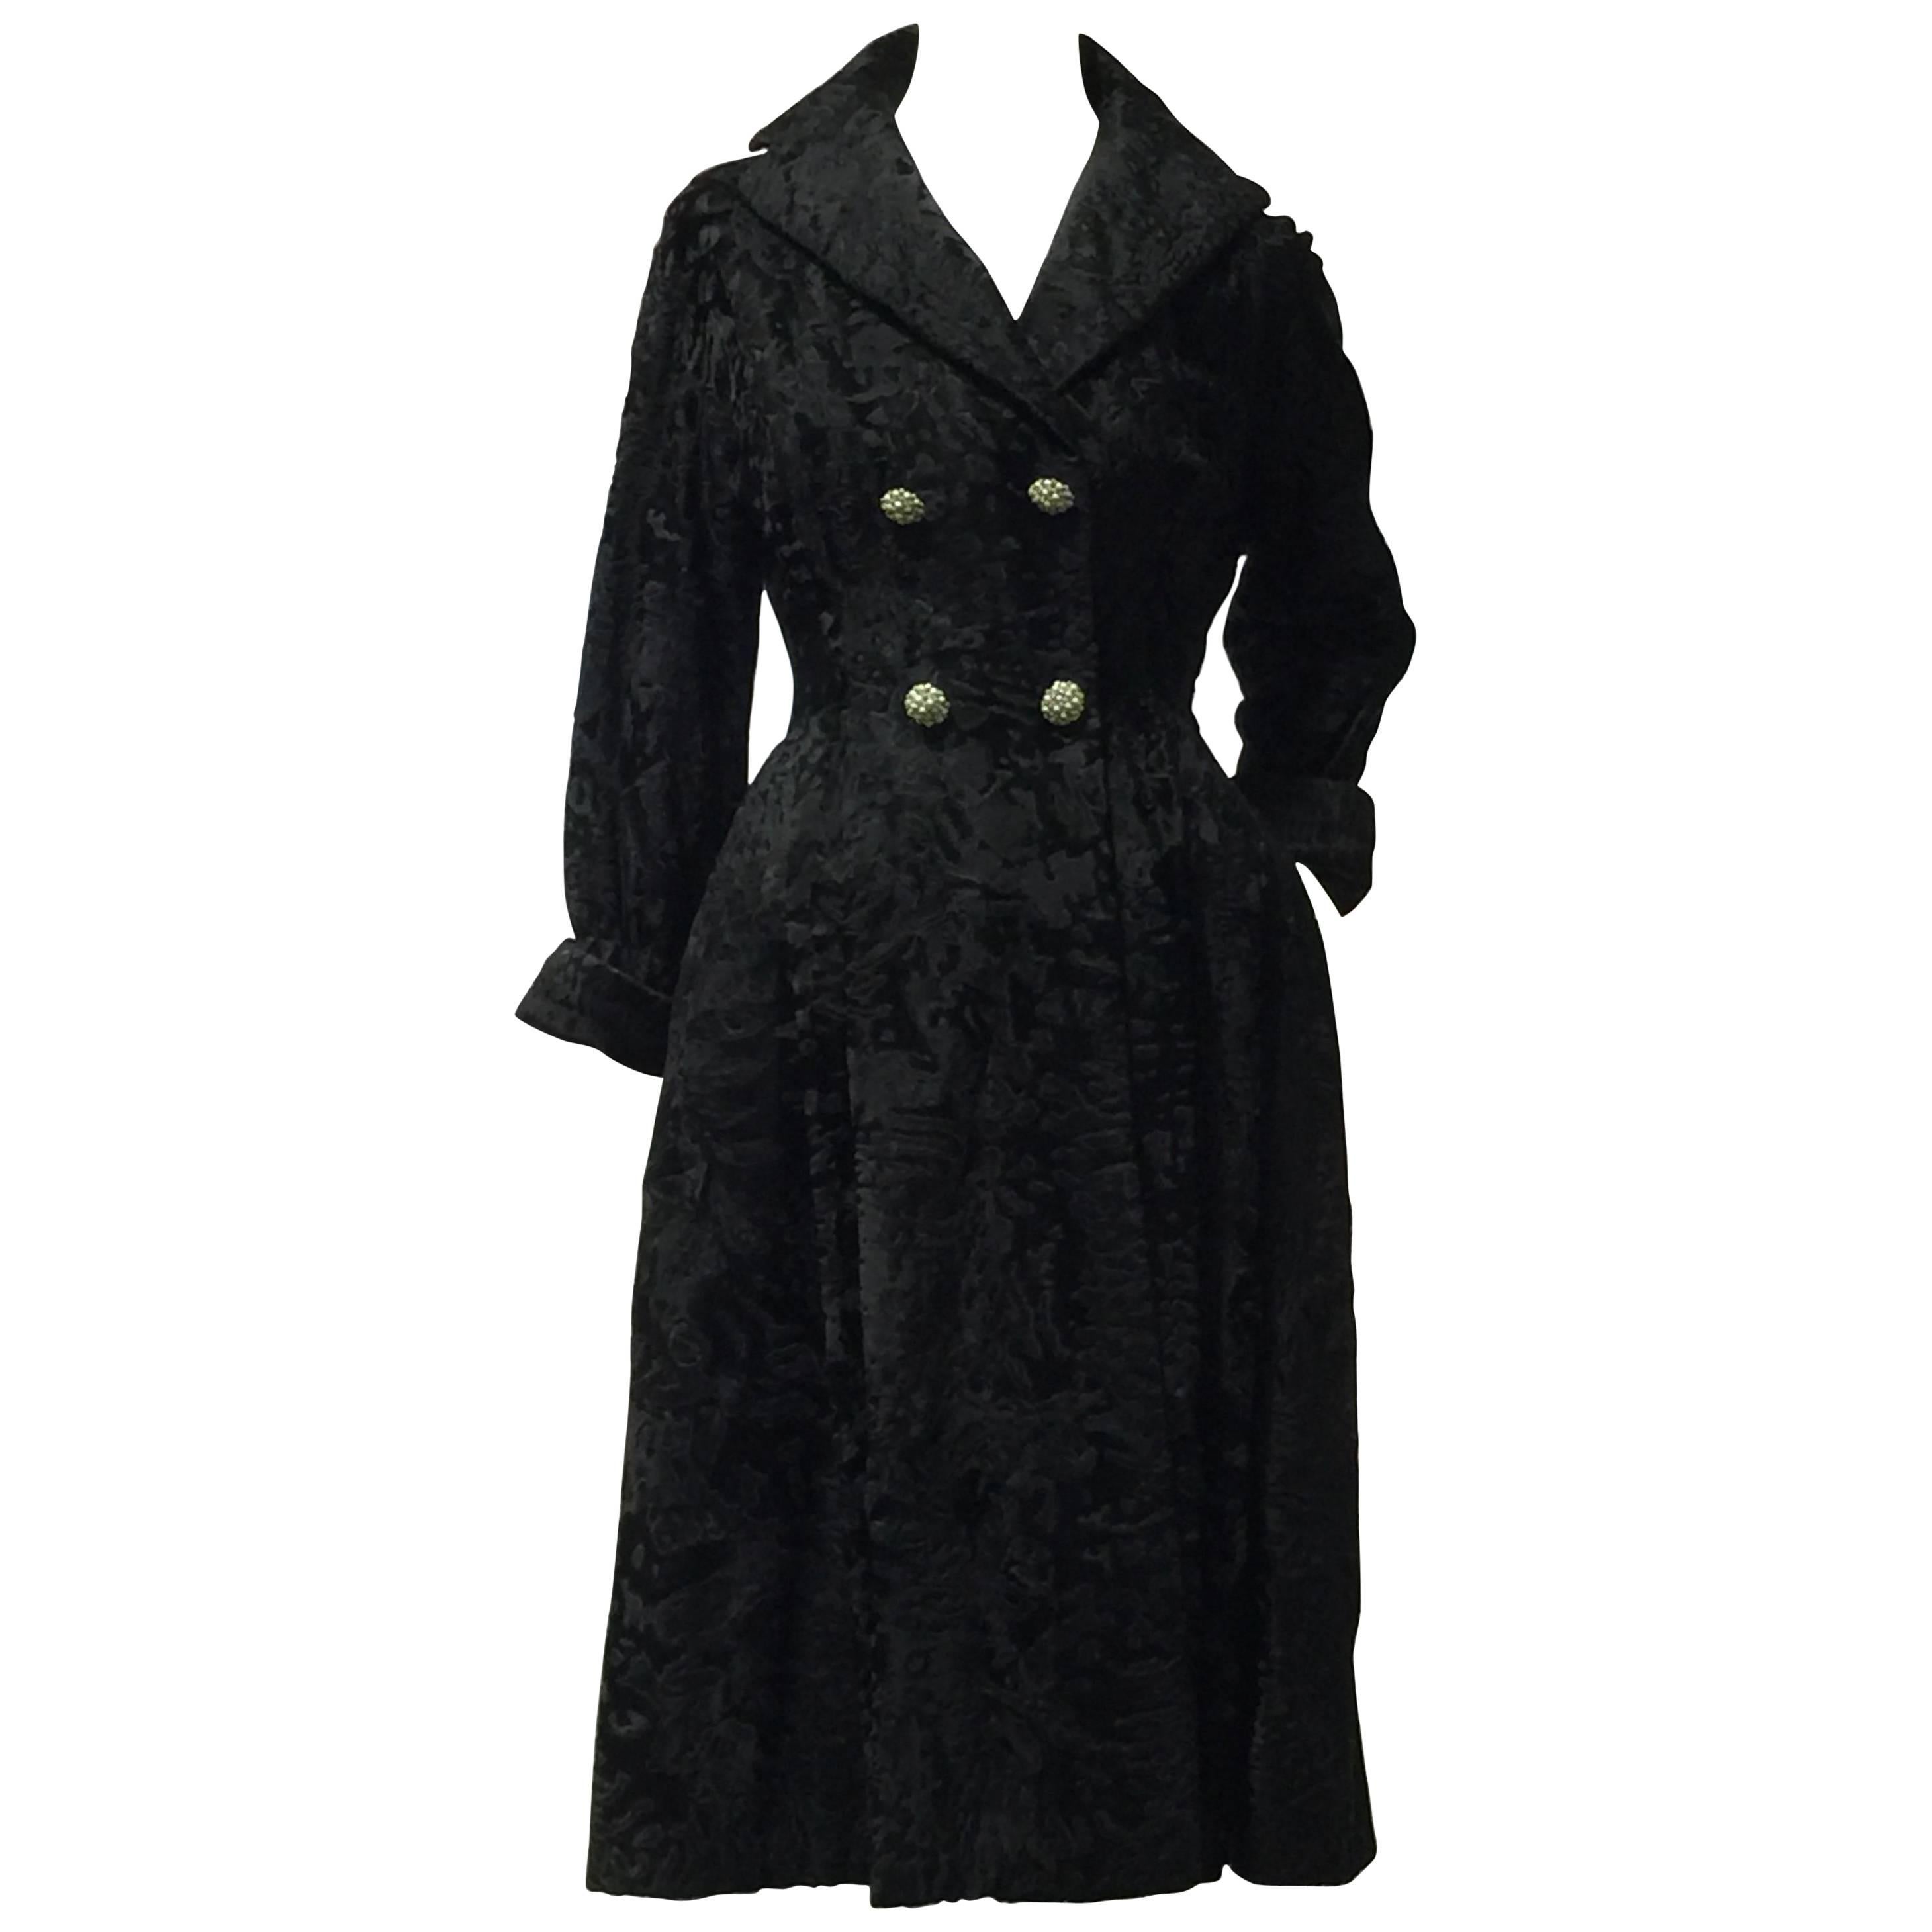 1950s Hattie Carnegie "New Look" Black Broadtail Fur Coat Dress